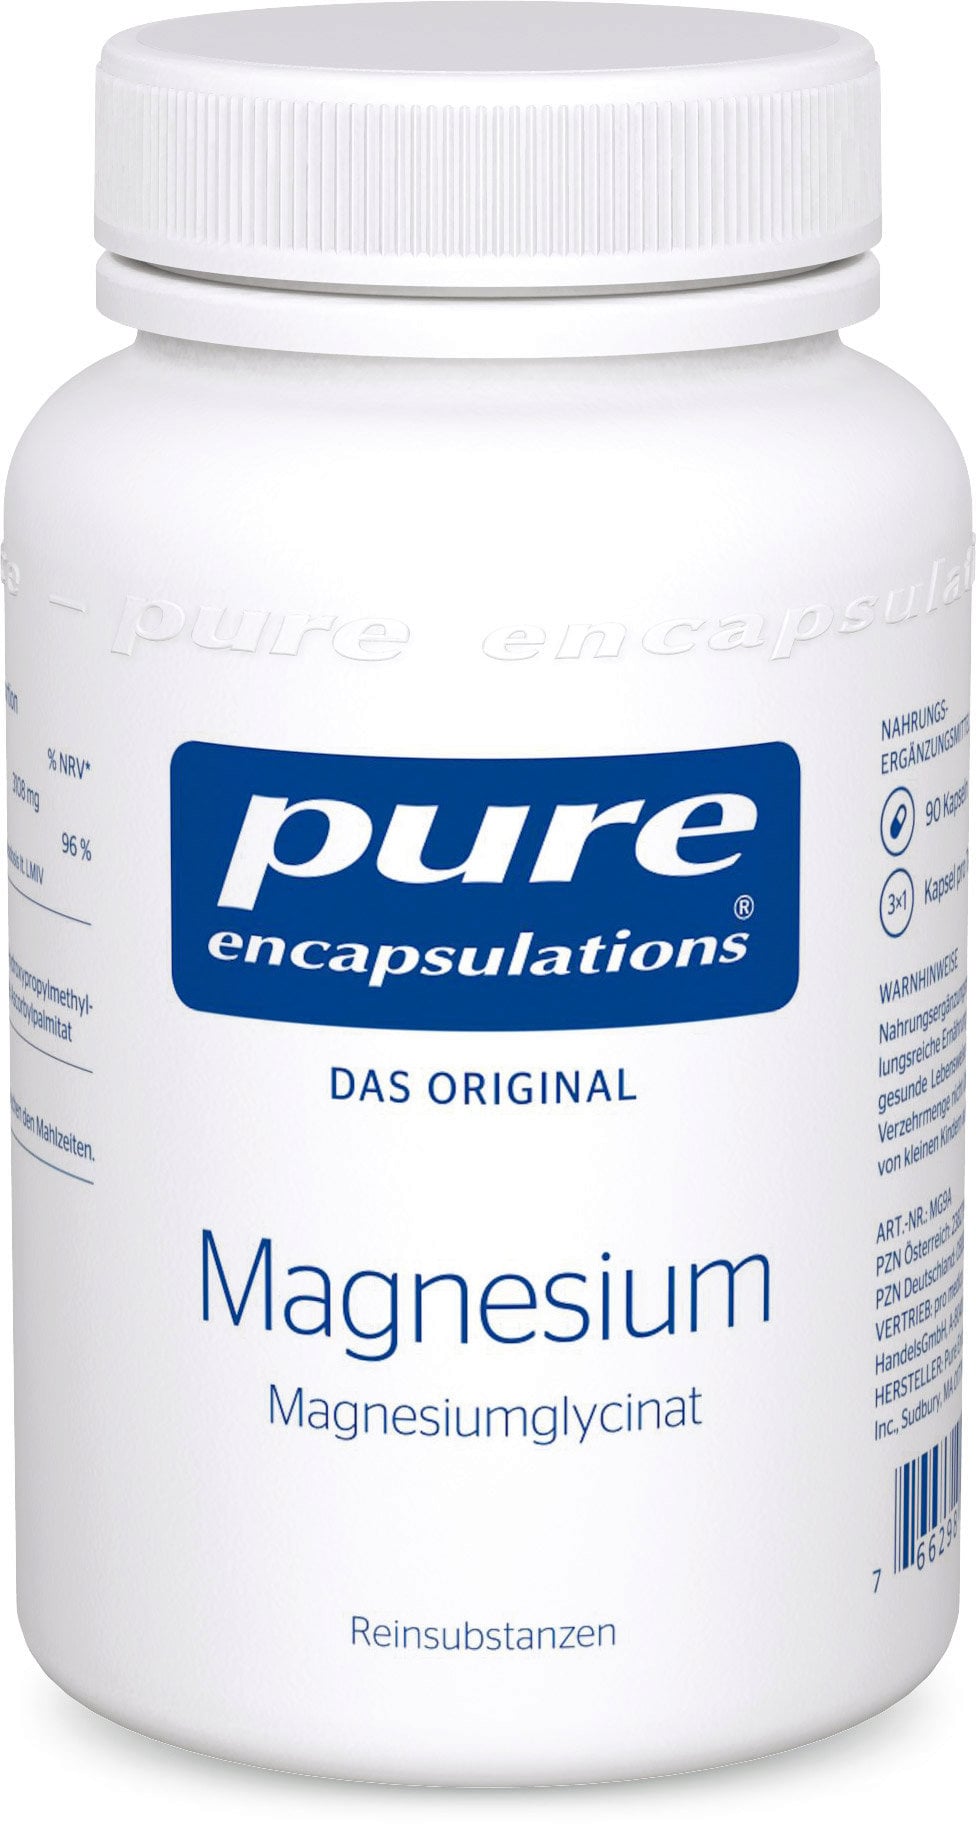 pure encapsulations Magnesium (Magnesiumglycinat) - 90 Kapseln